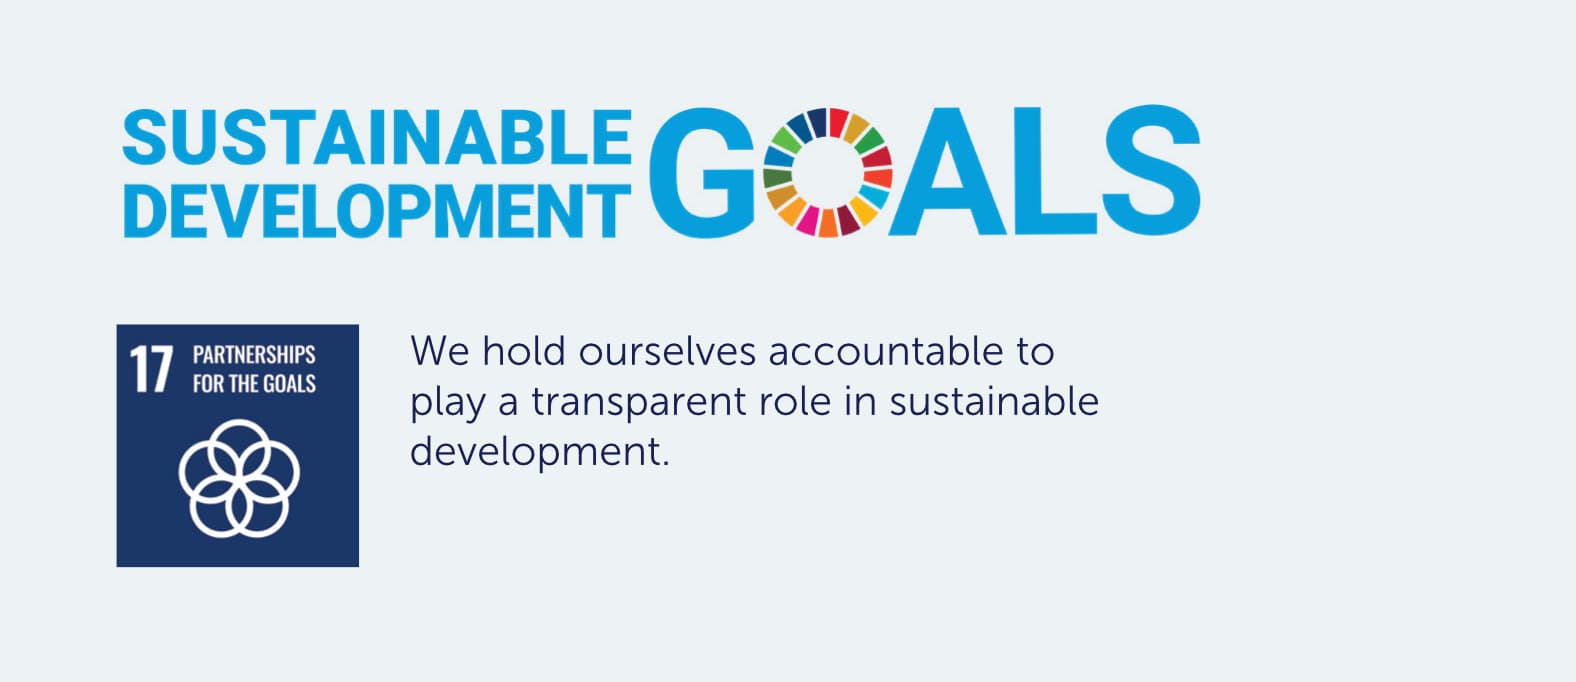 Sustainability-development-goals